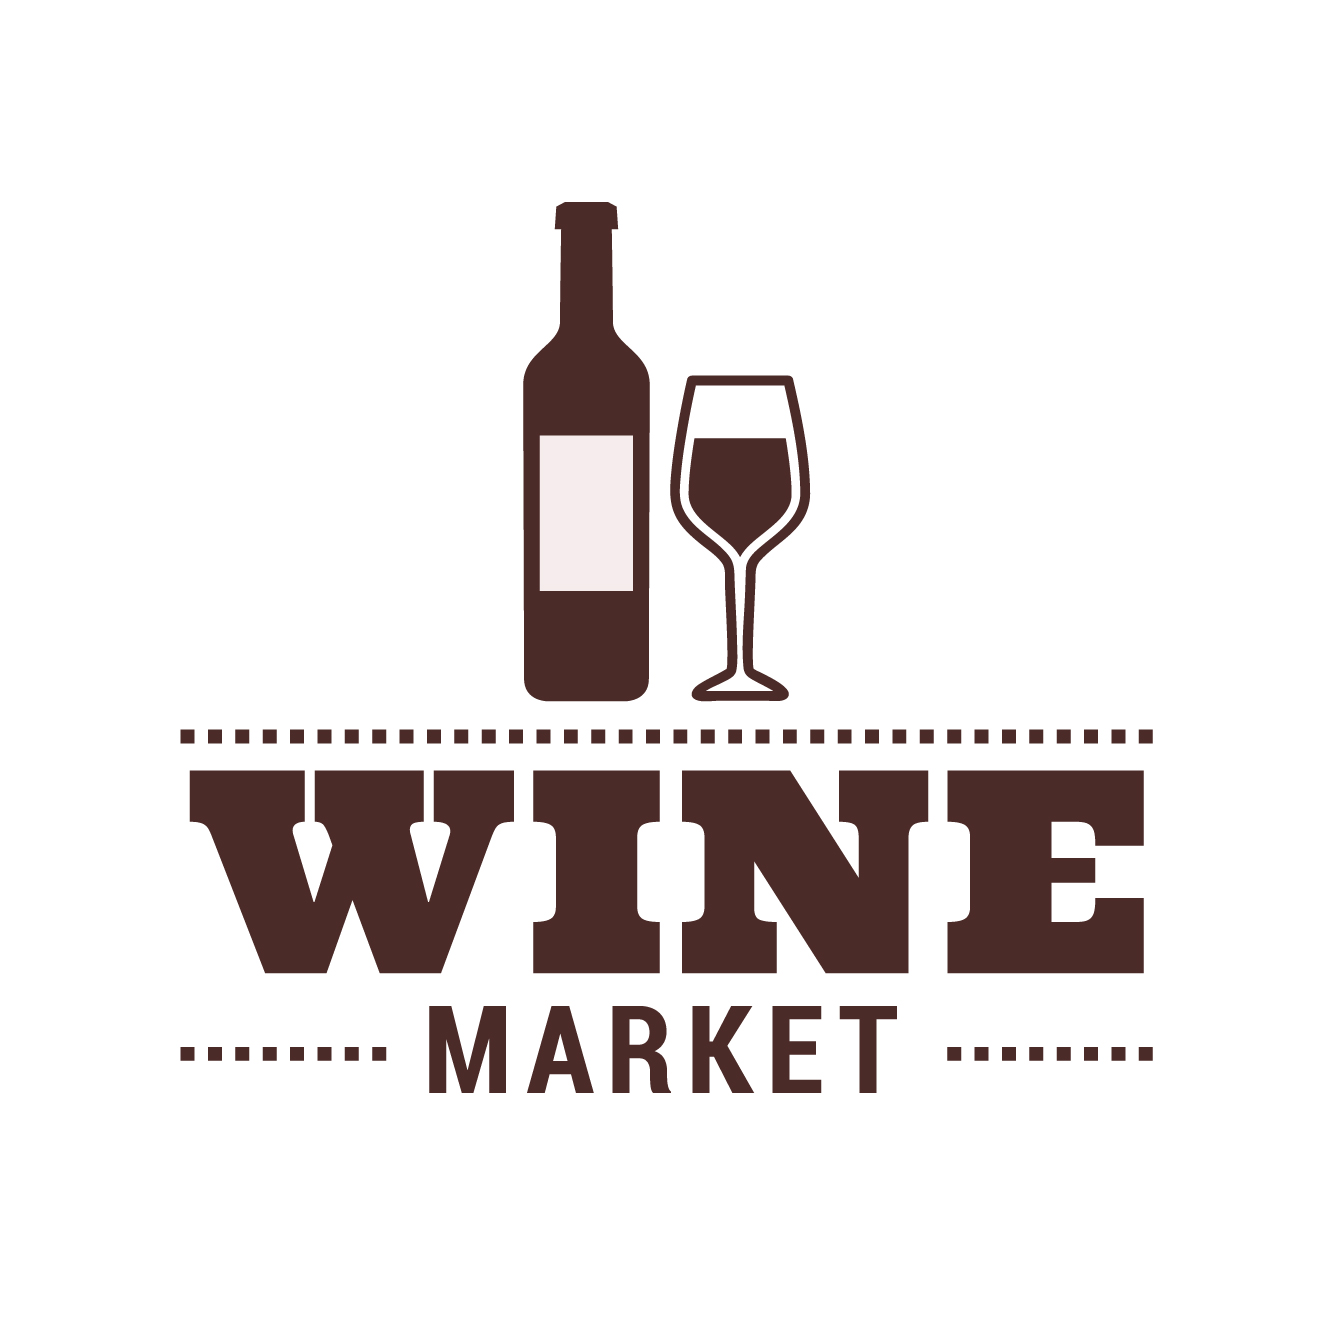 Winemarket